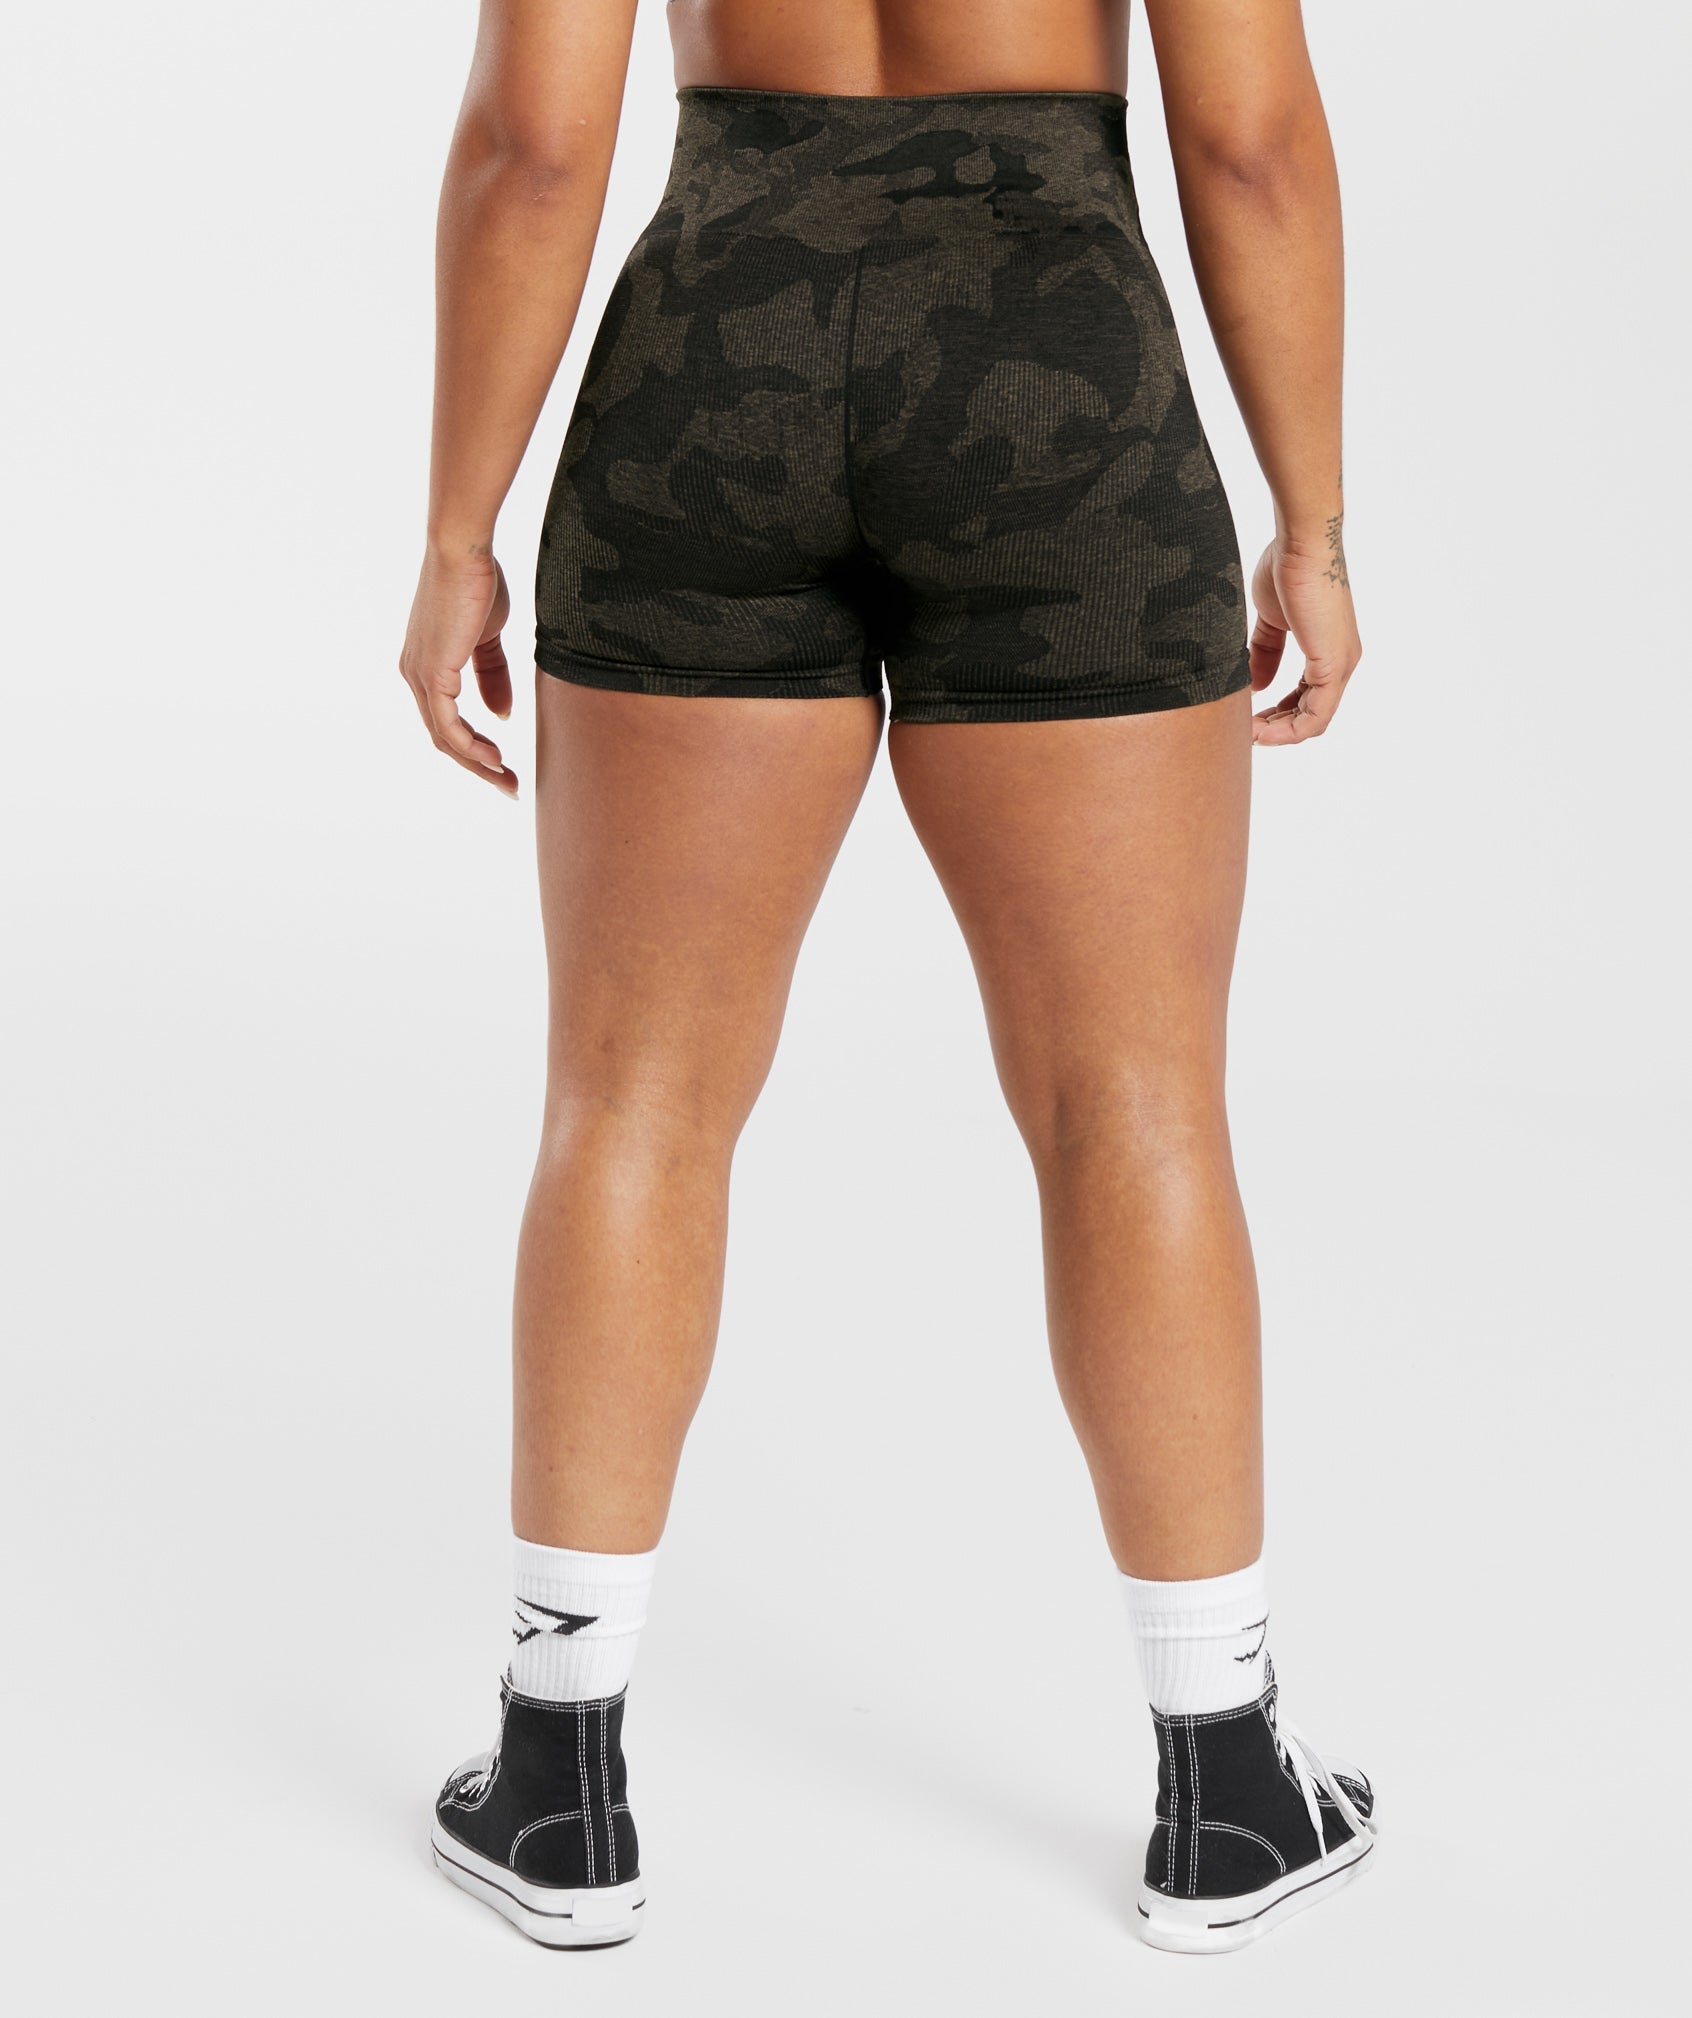 Women's Seamless Workout Shorts